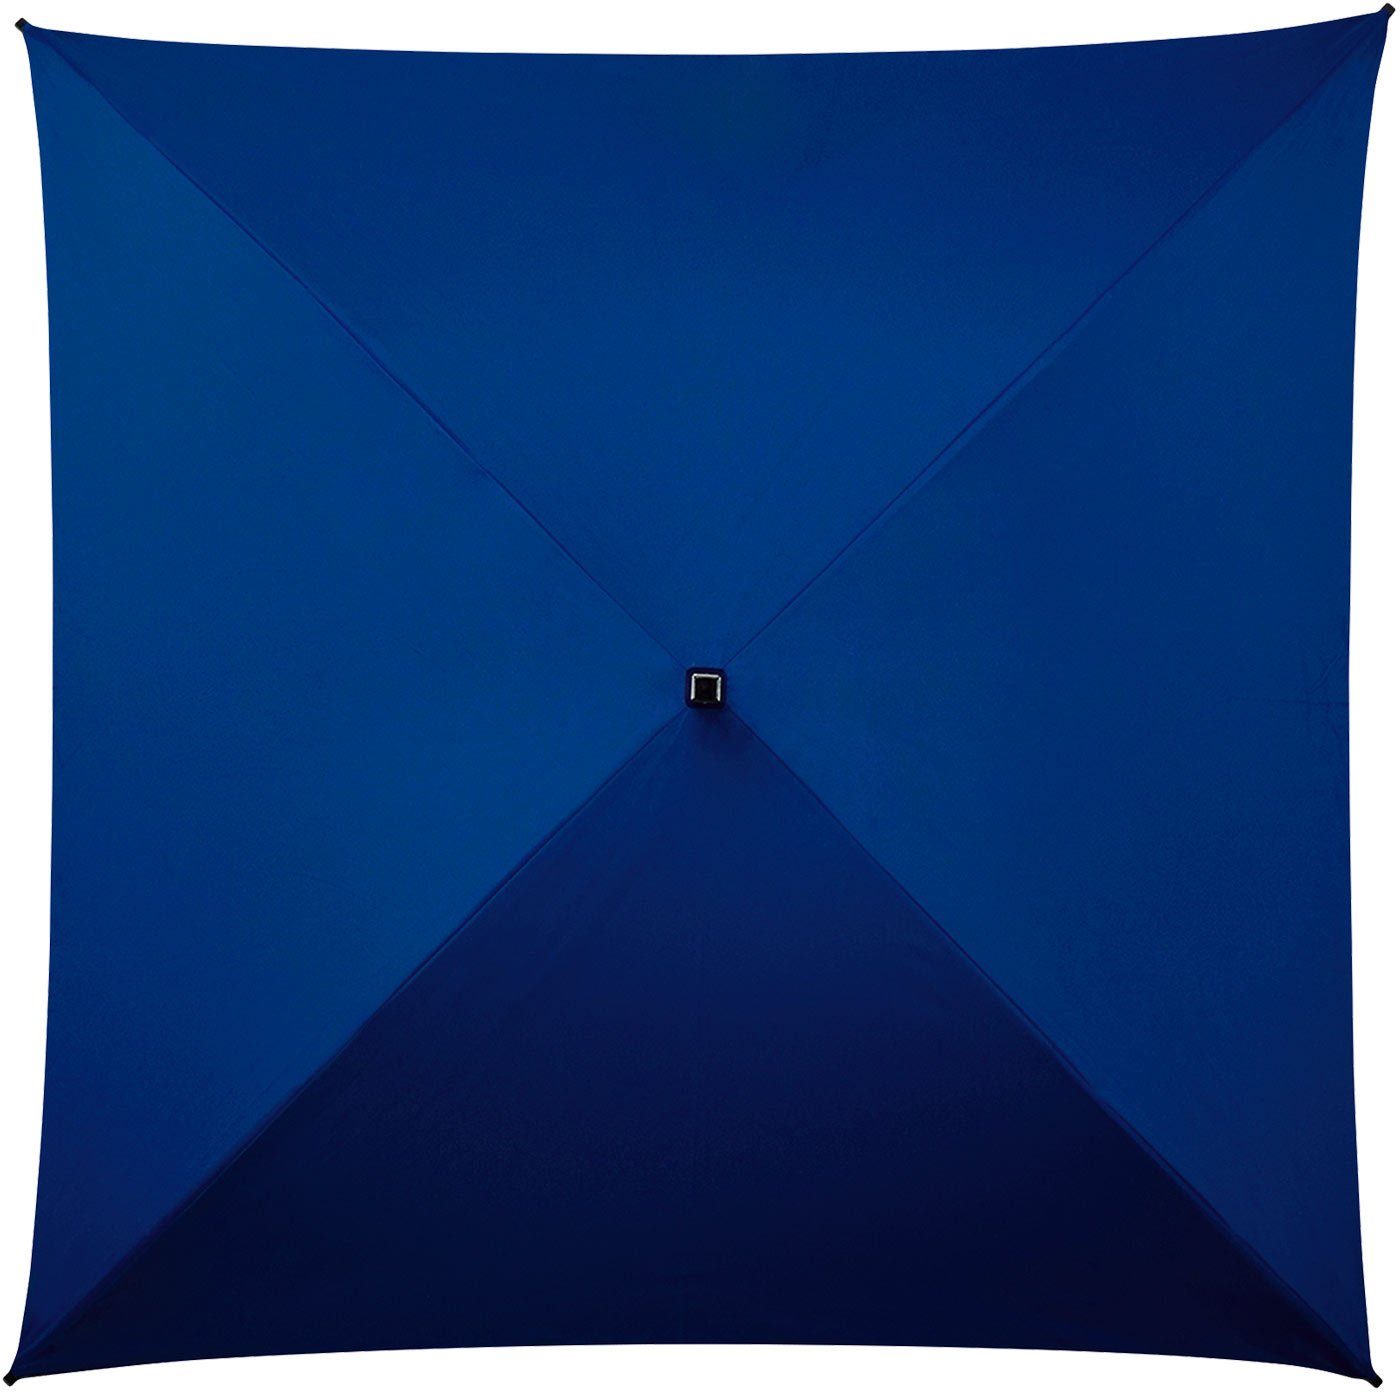 Impliva Langregenschirm All Square® voll der Regenschirm, Regenschirm ganz quadratischer blau besondere